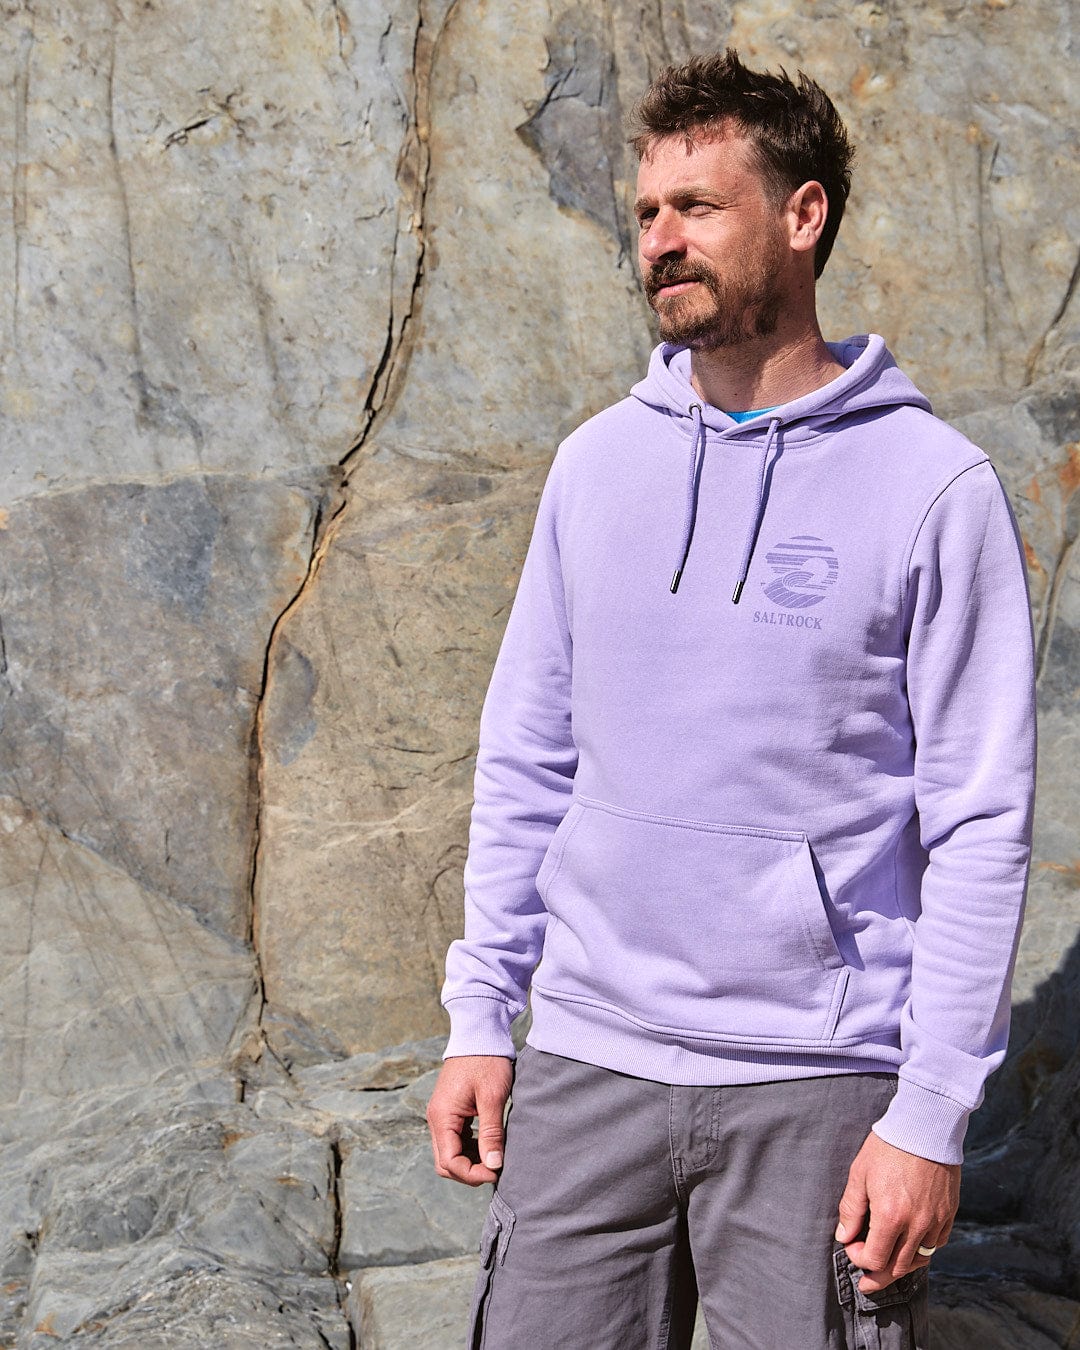 A man wearing a Saltrock Atlantic - Mens Pop Hoodie - Purple standing next to a rock wall.